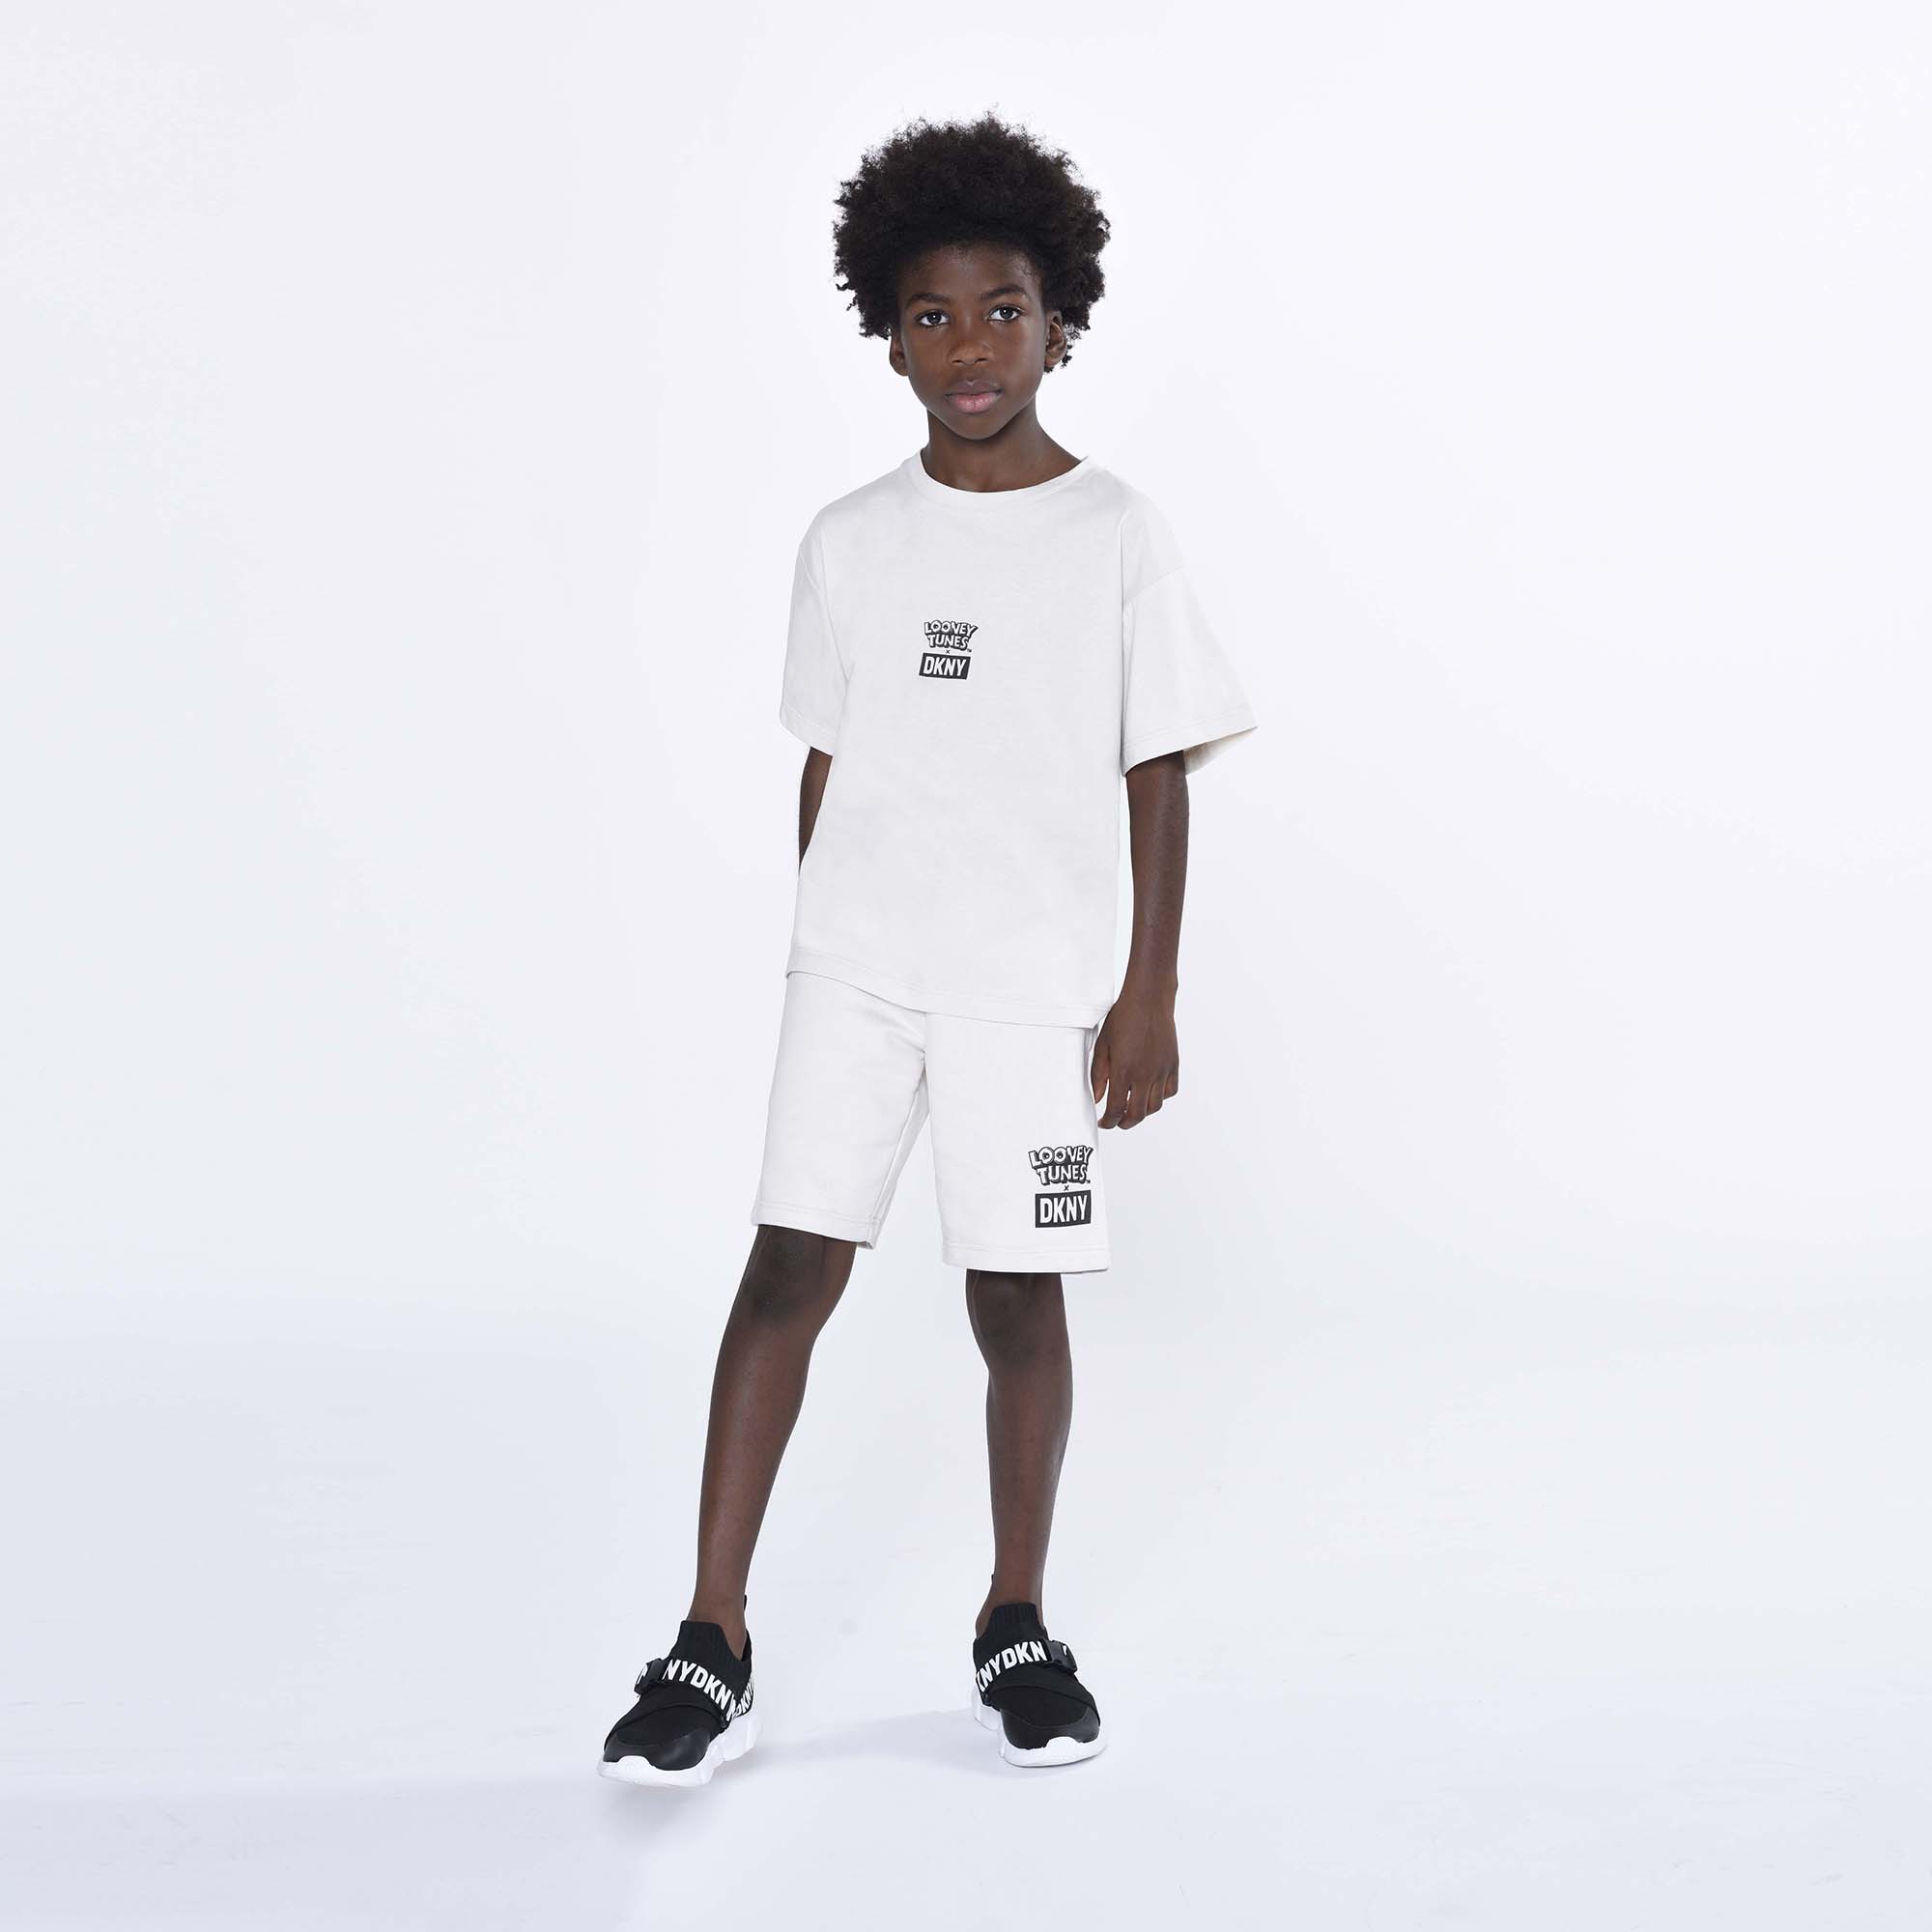 Unisex fleece shorts DKNY for BOY